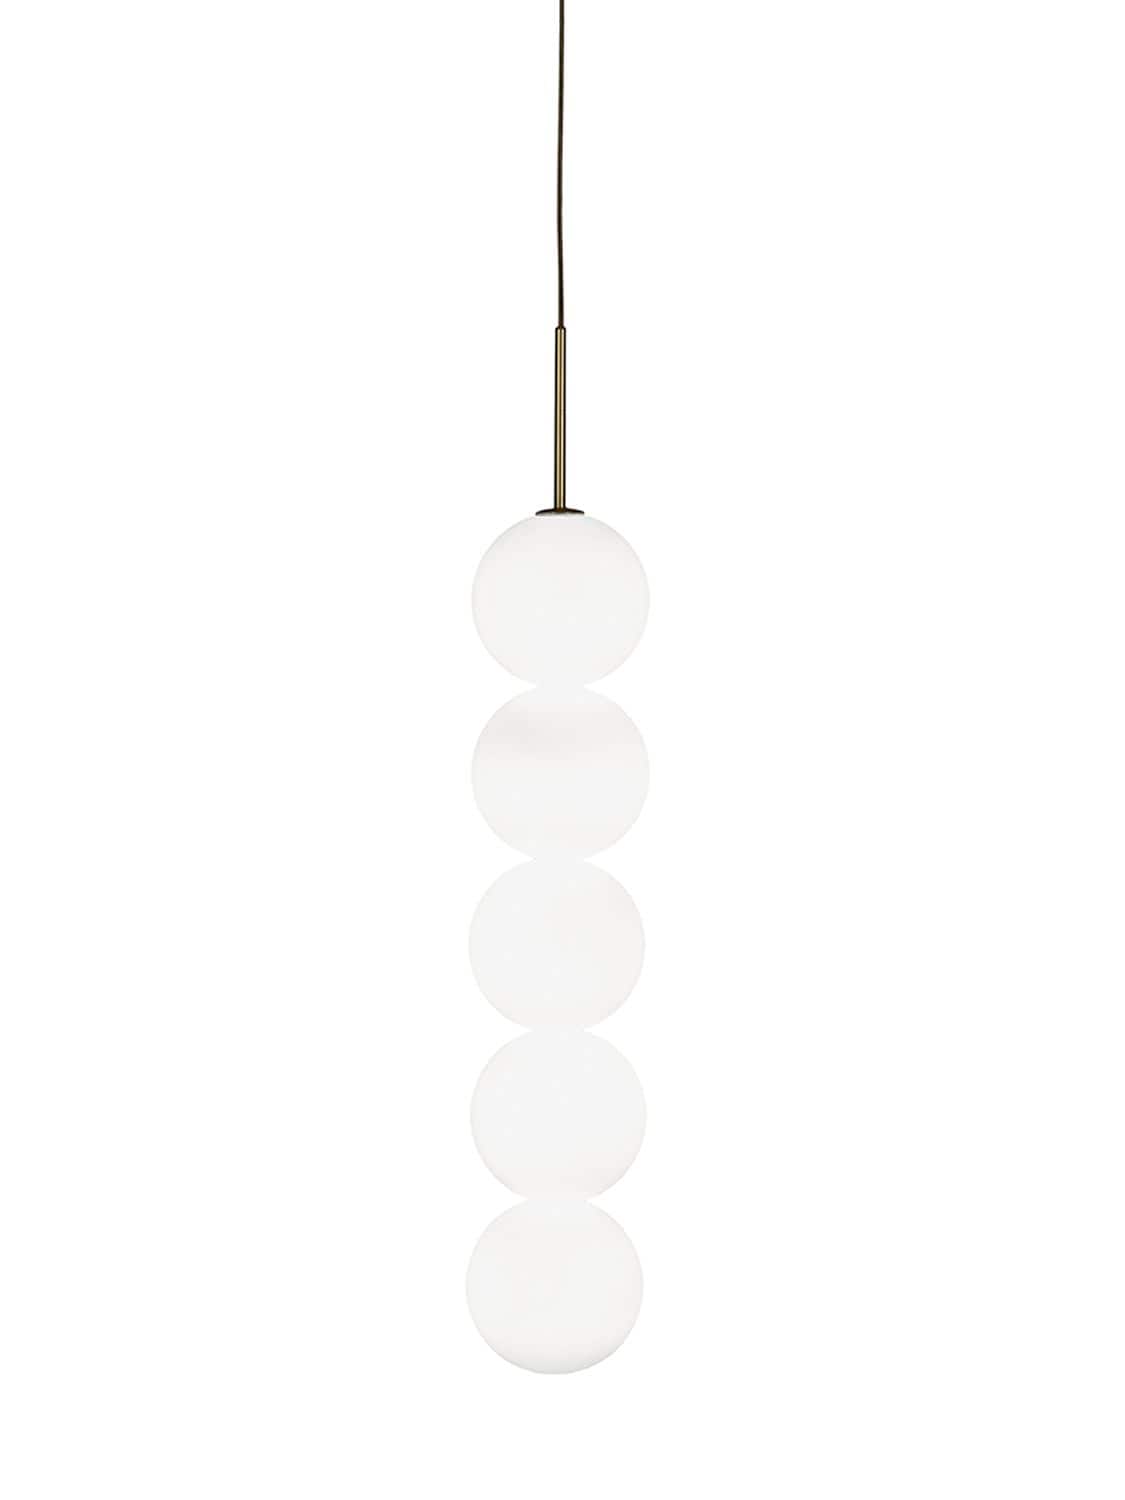 Terzani Lighting Abacus Spheres Pendant Lamp In White